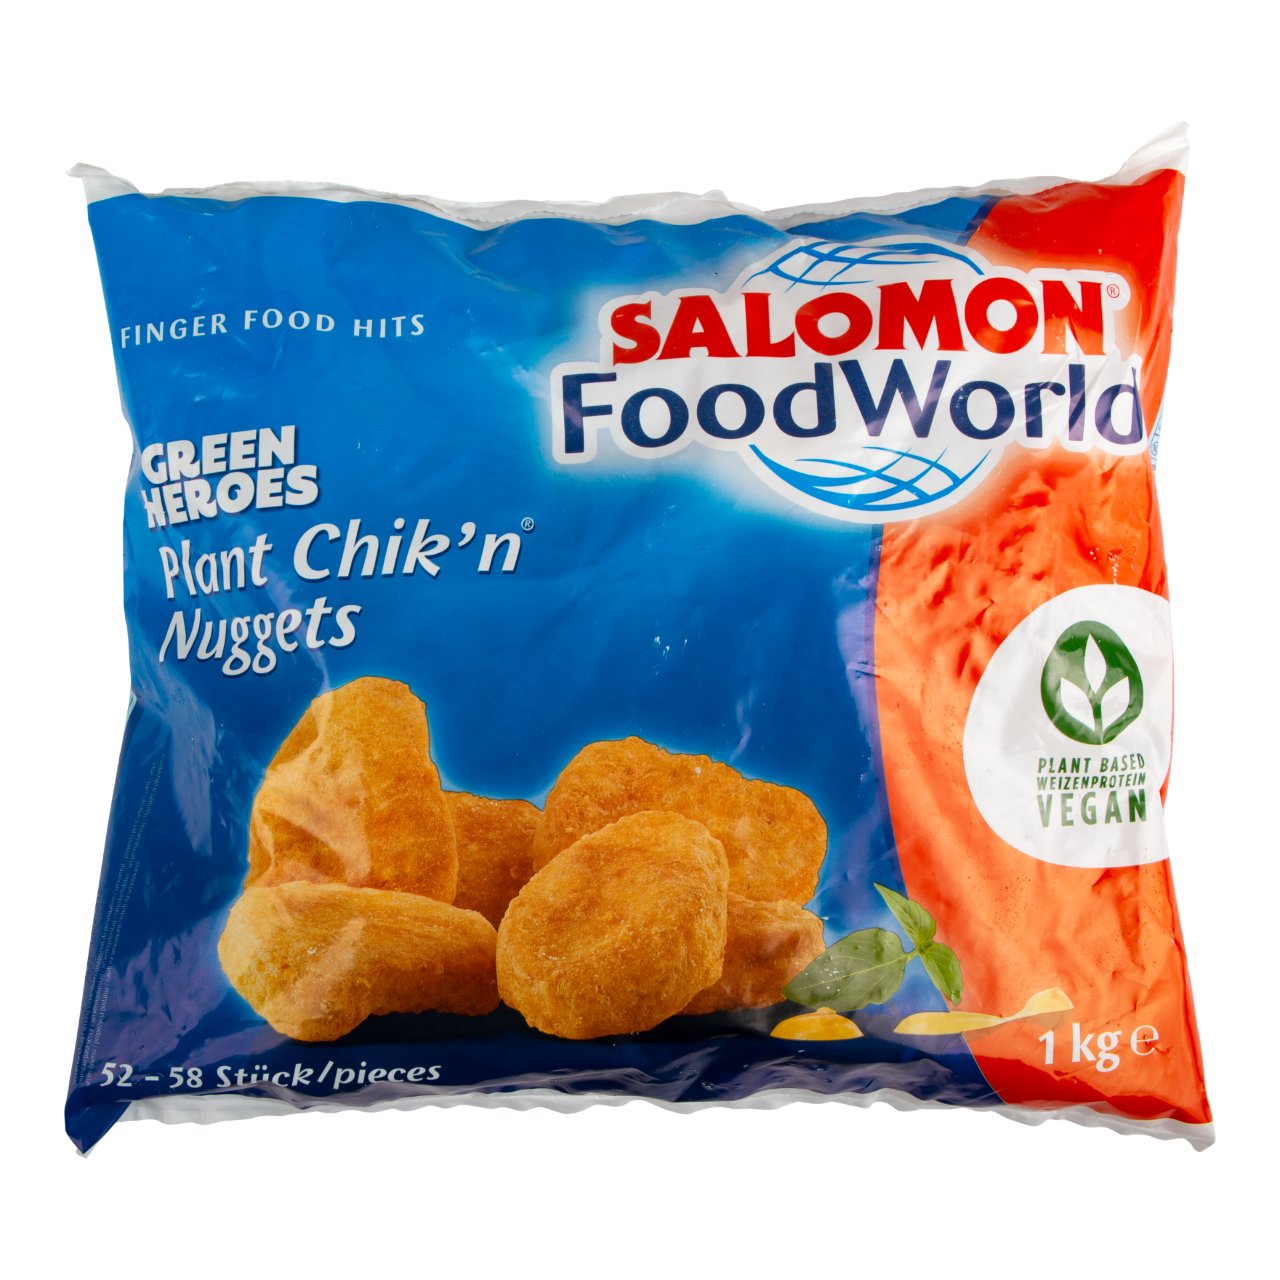 Green Heroes – SALOMON FoodWorld® GmbH